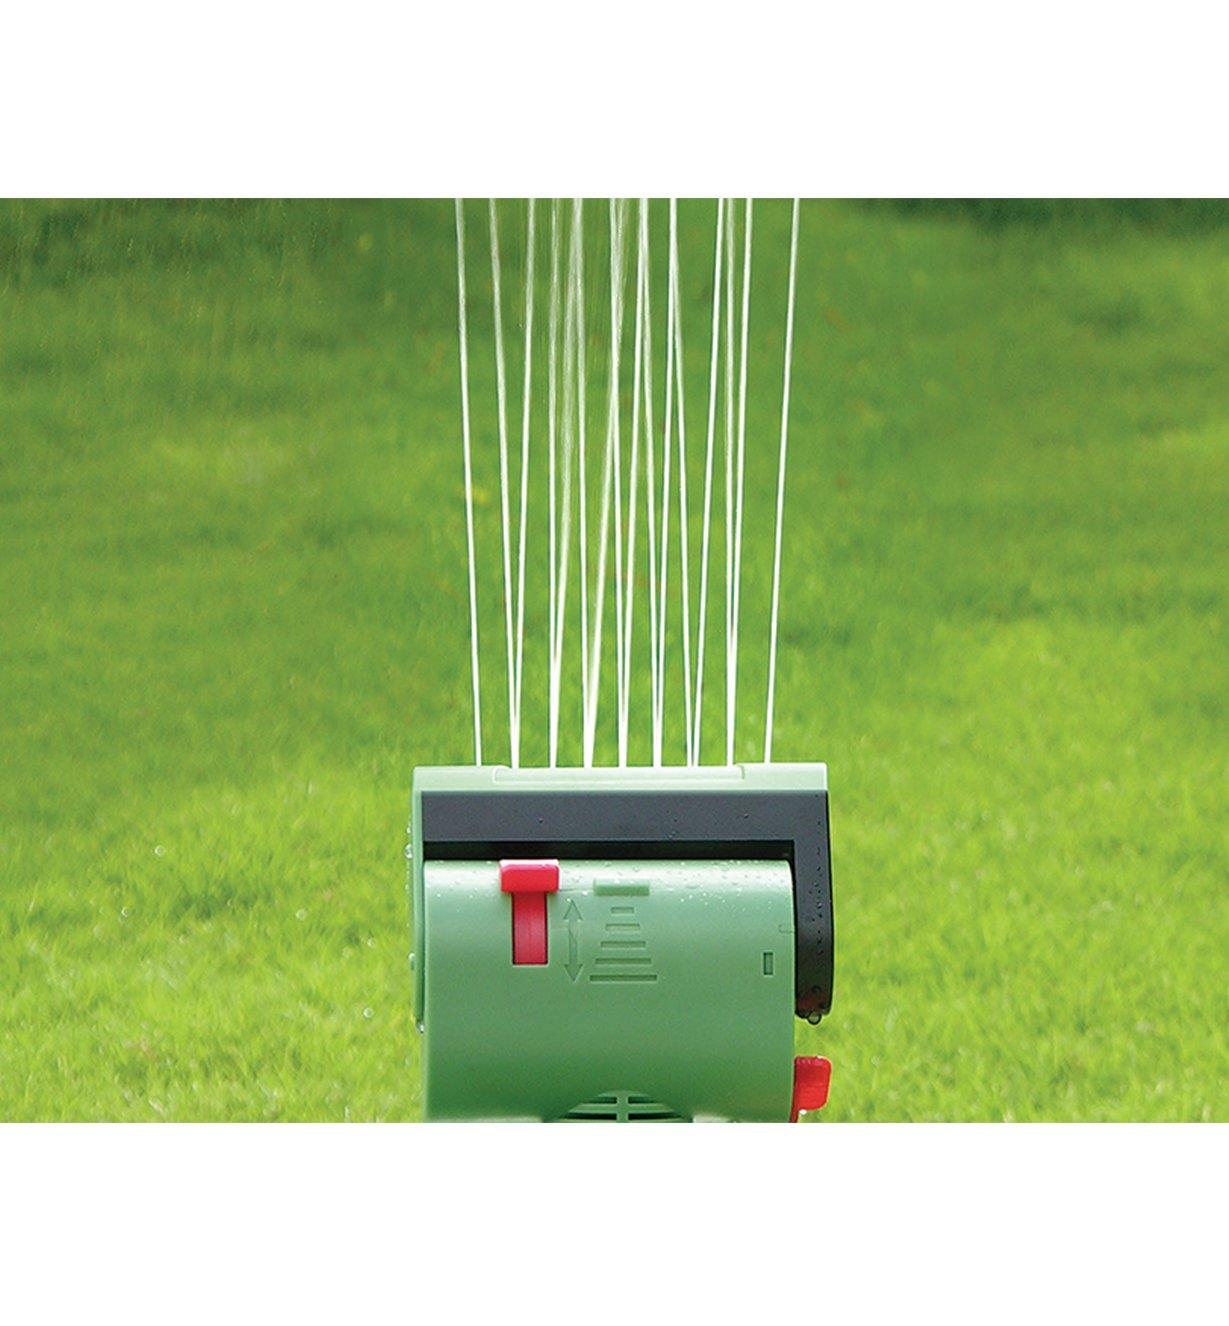 Adjustable-Pattern Oscillating Sprinkler spray pattern set for narrow coverage